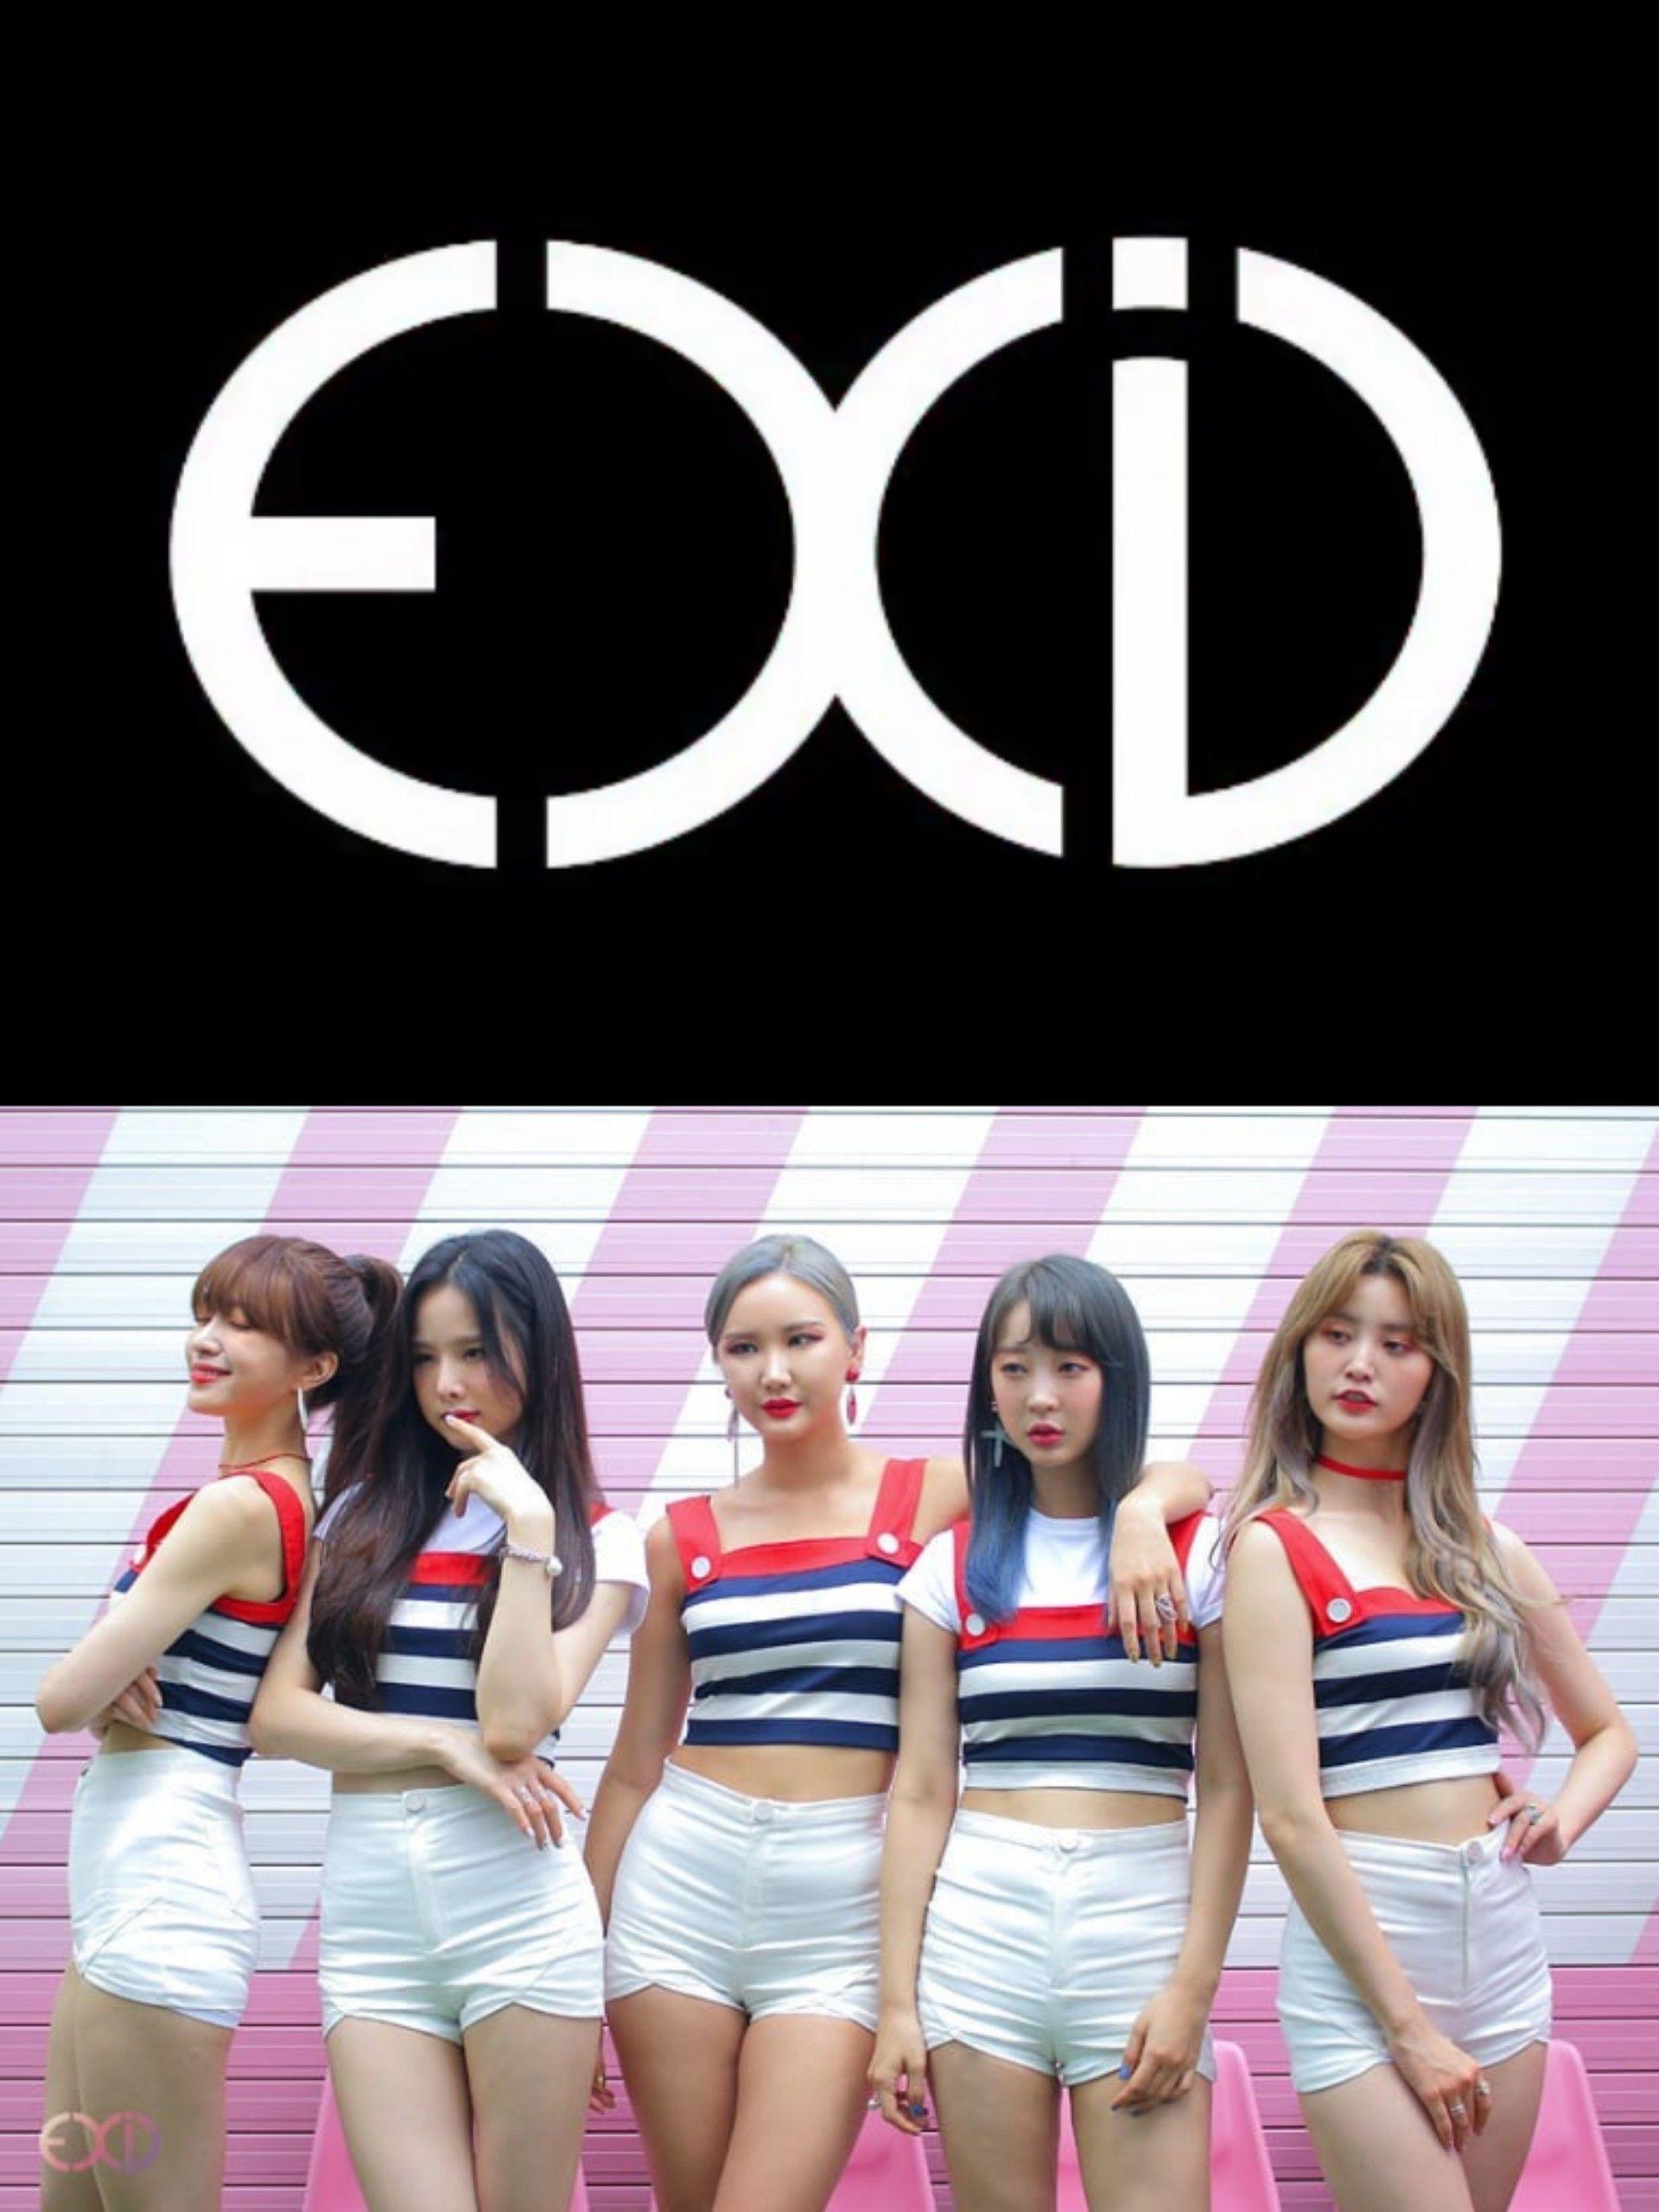 EXID Logo - File:EXID LOGO (4)(1).jpg - Wikimedia Commons